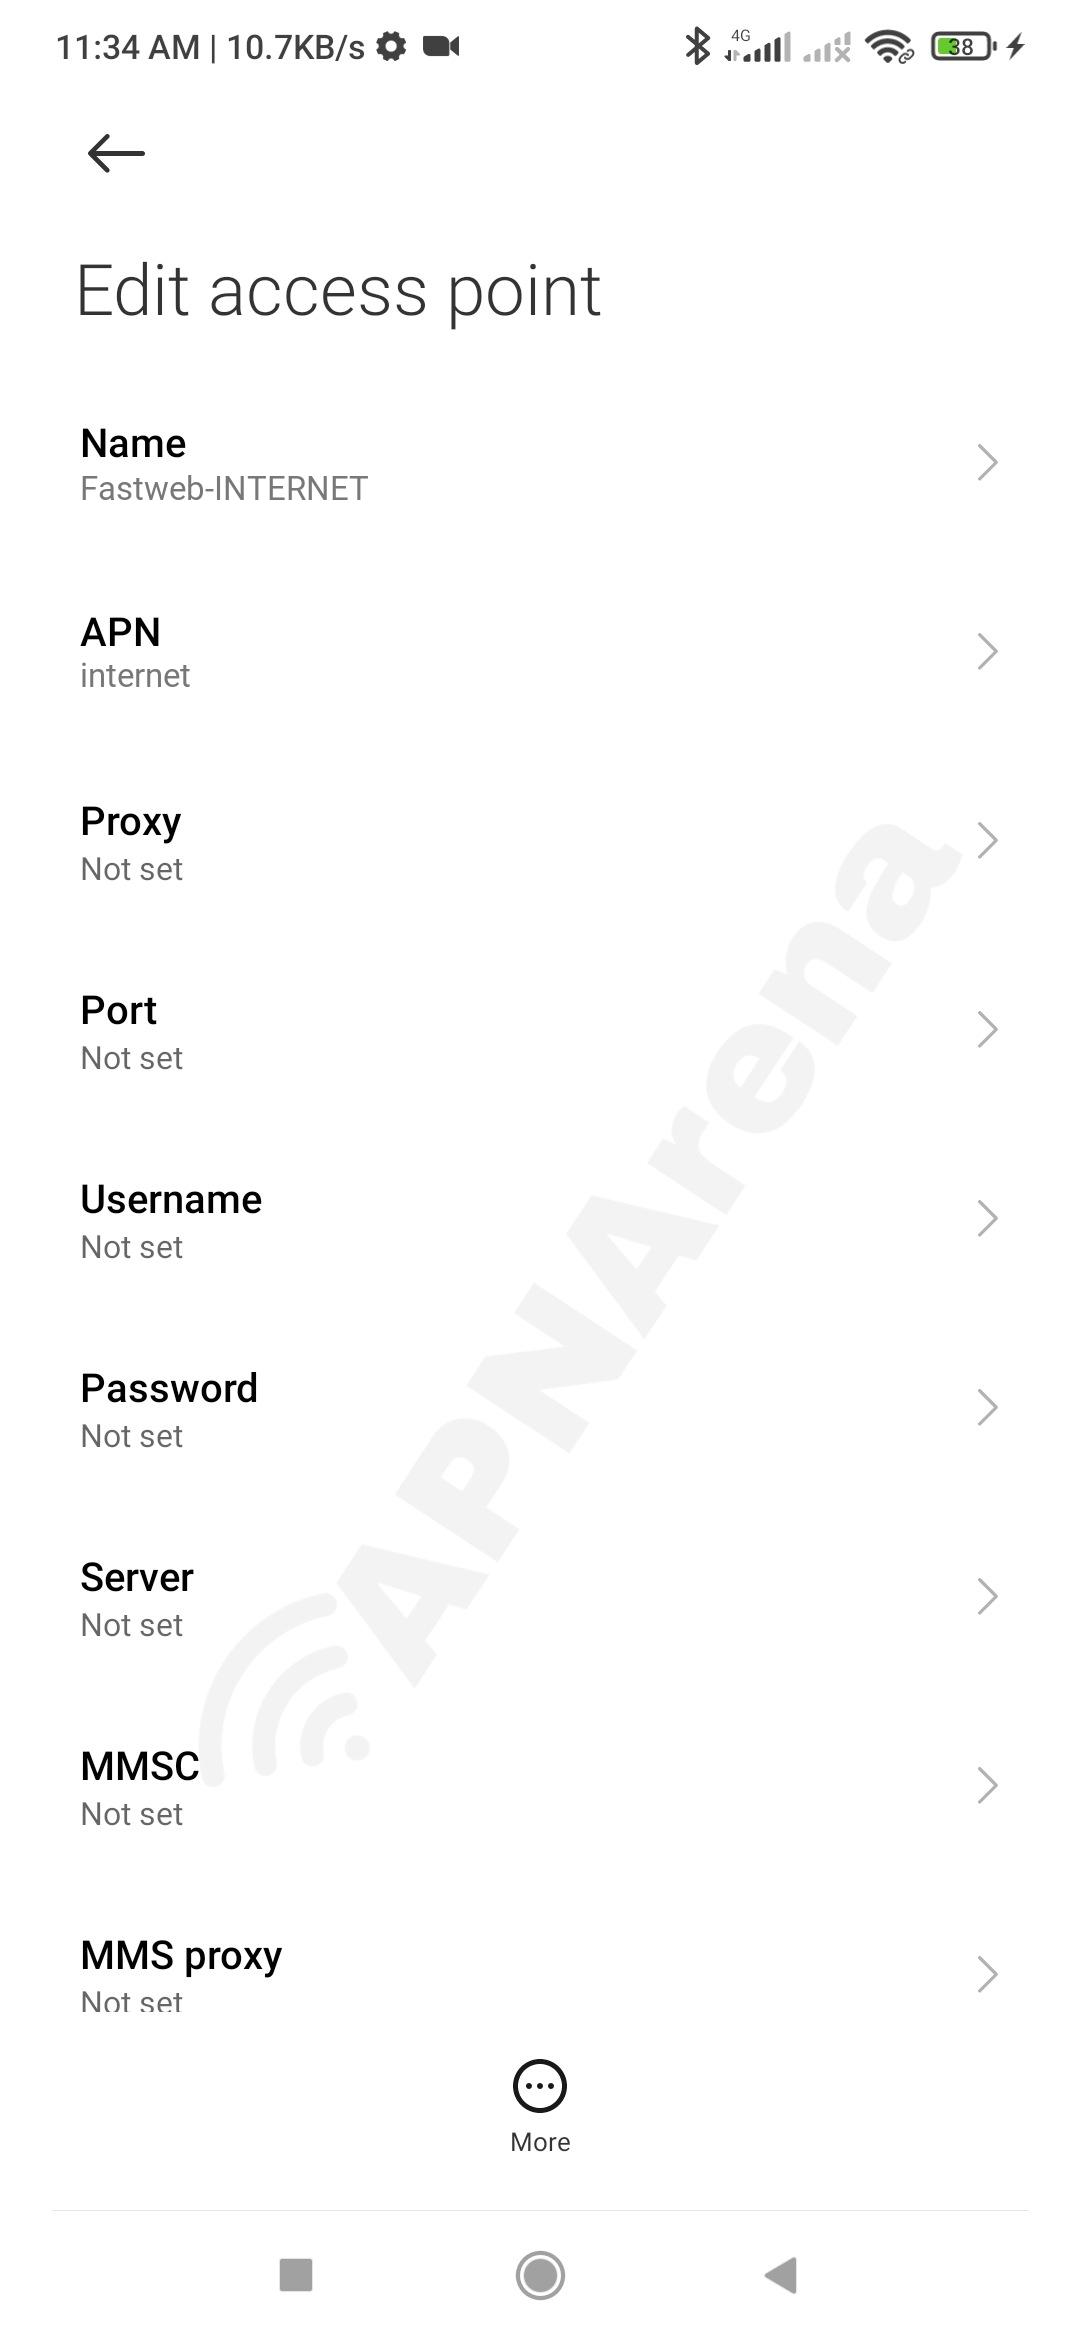 Fastweb APN Settings for Android